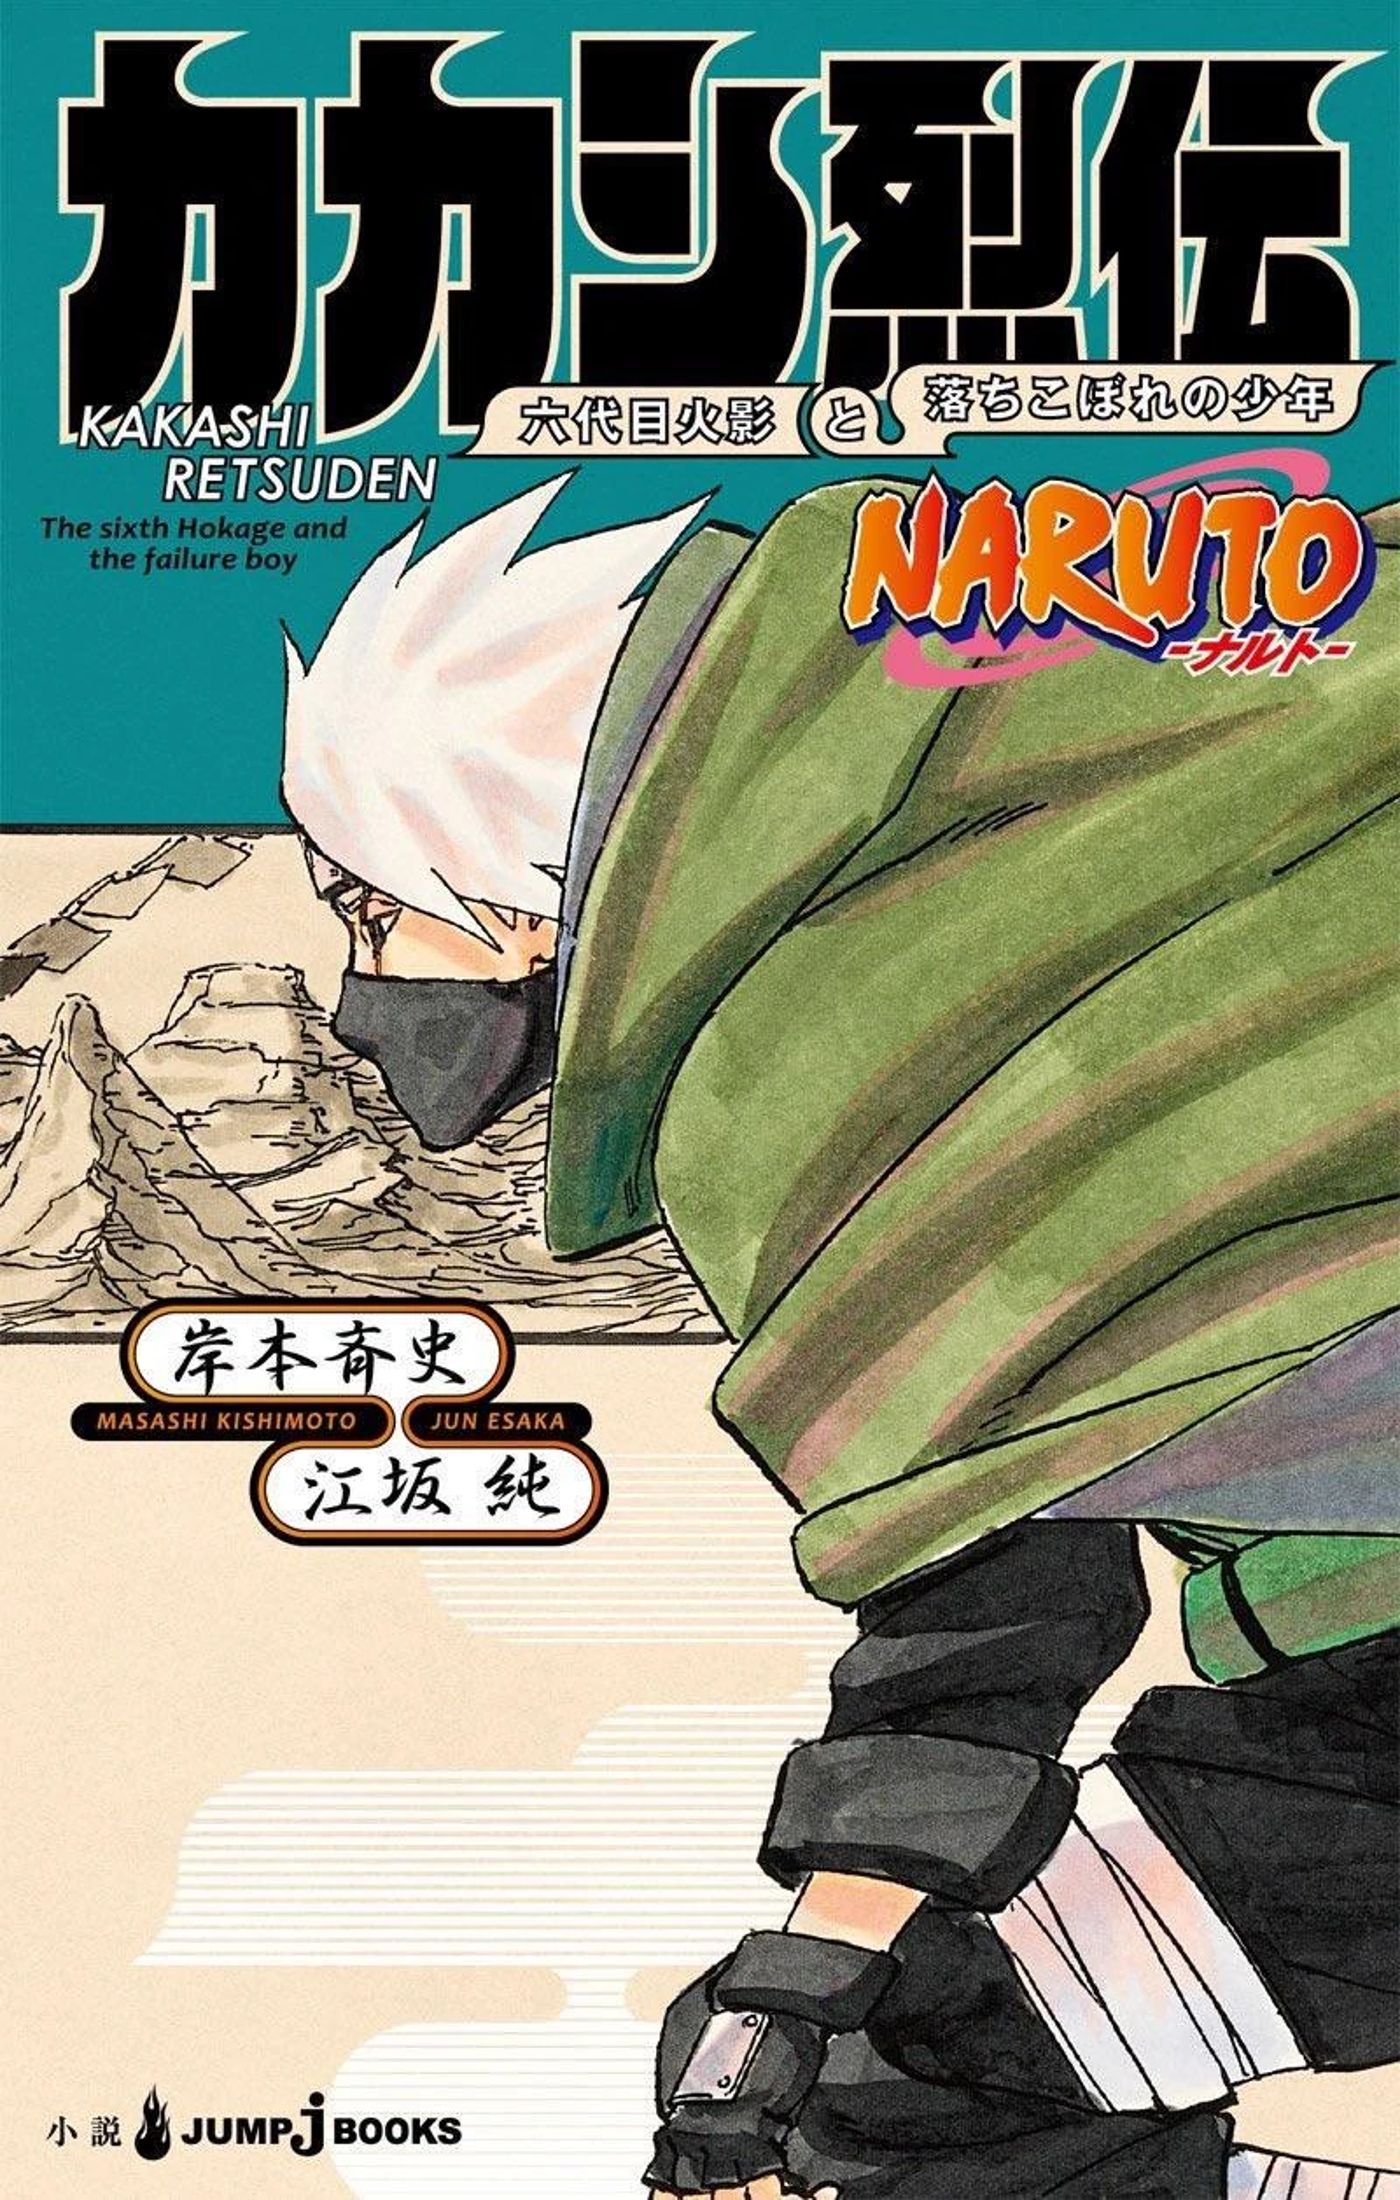 Naruto is Finally Telling Kakashi’s Missing Story as the Sixth Hokage